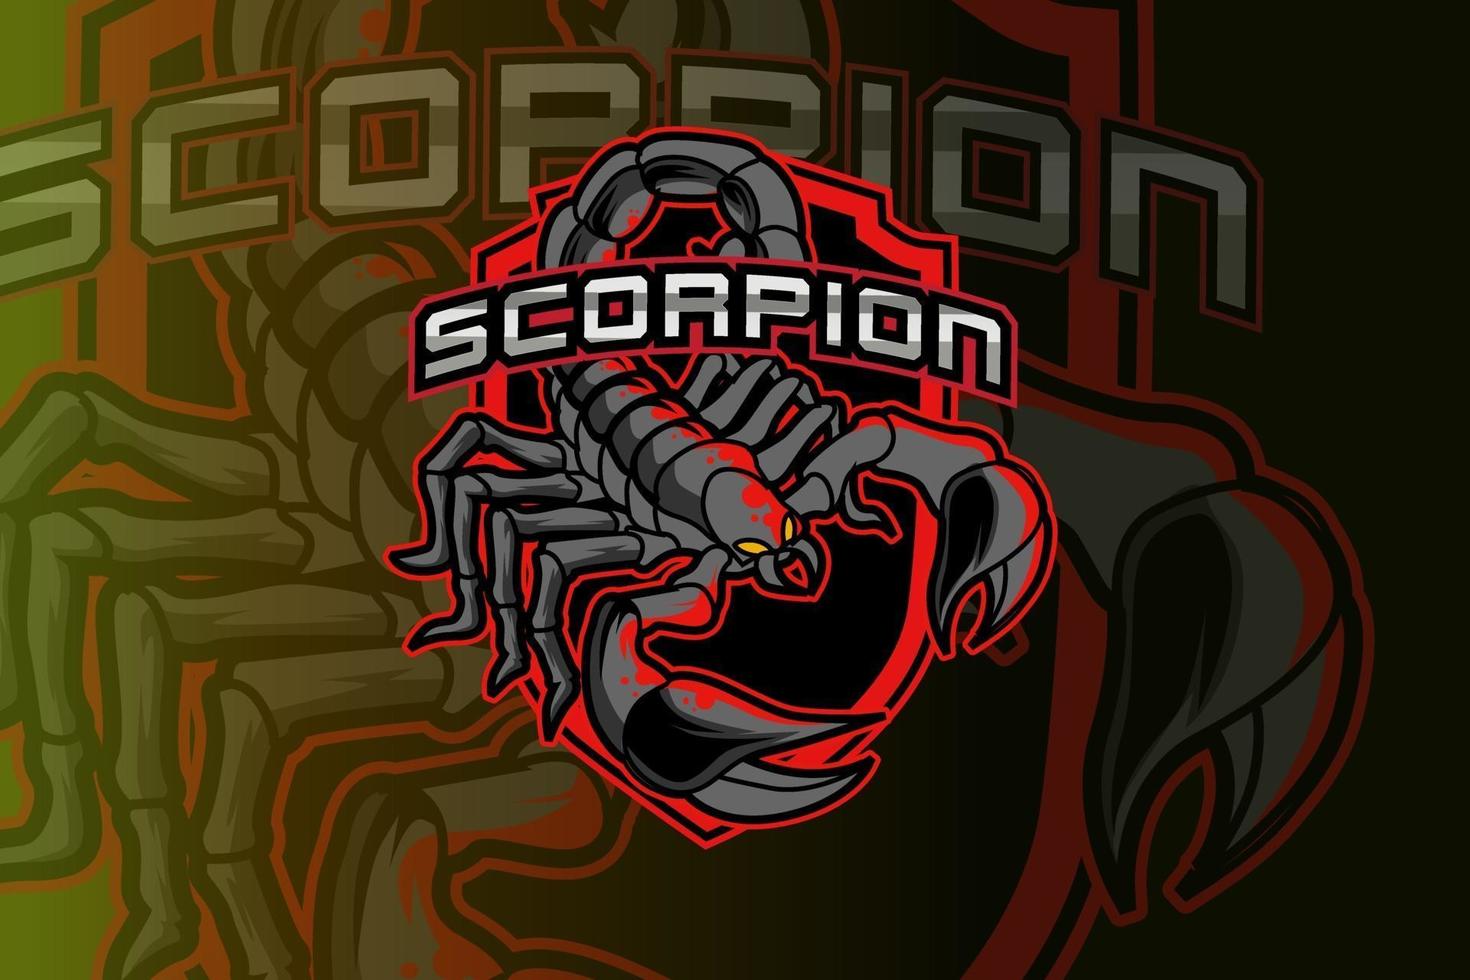 scorpion logo for sport club or team. animal mascot logotype vector